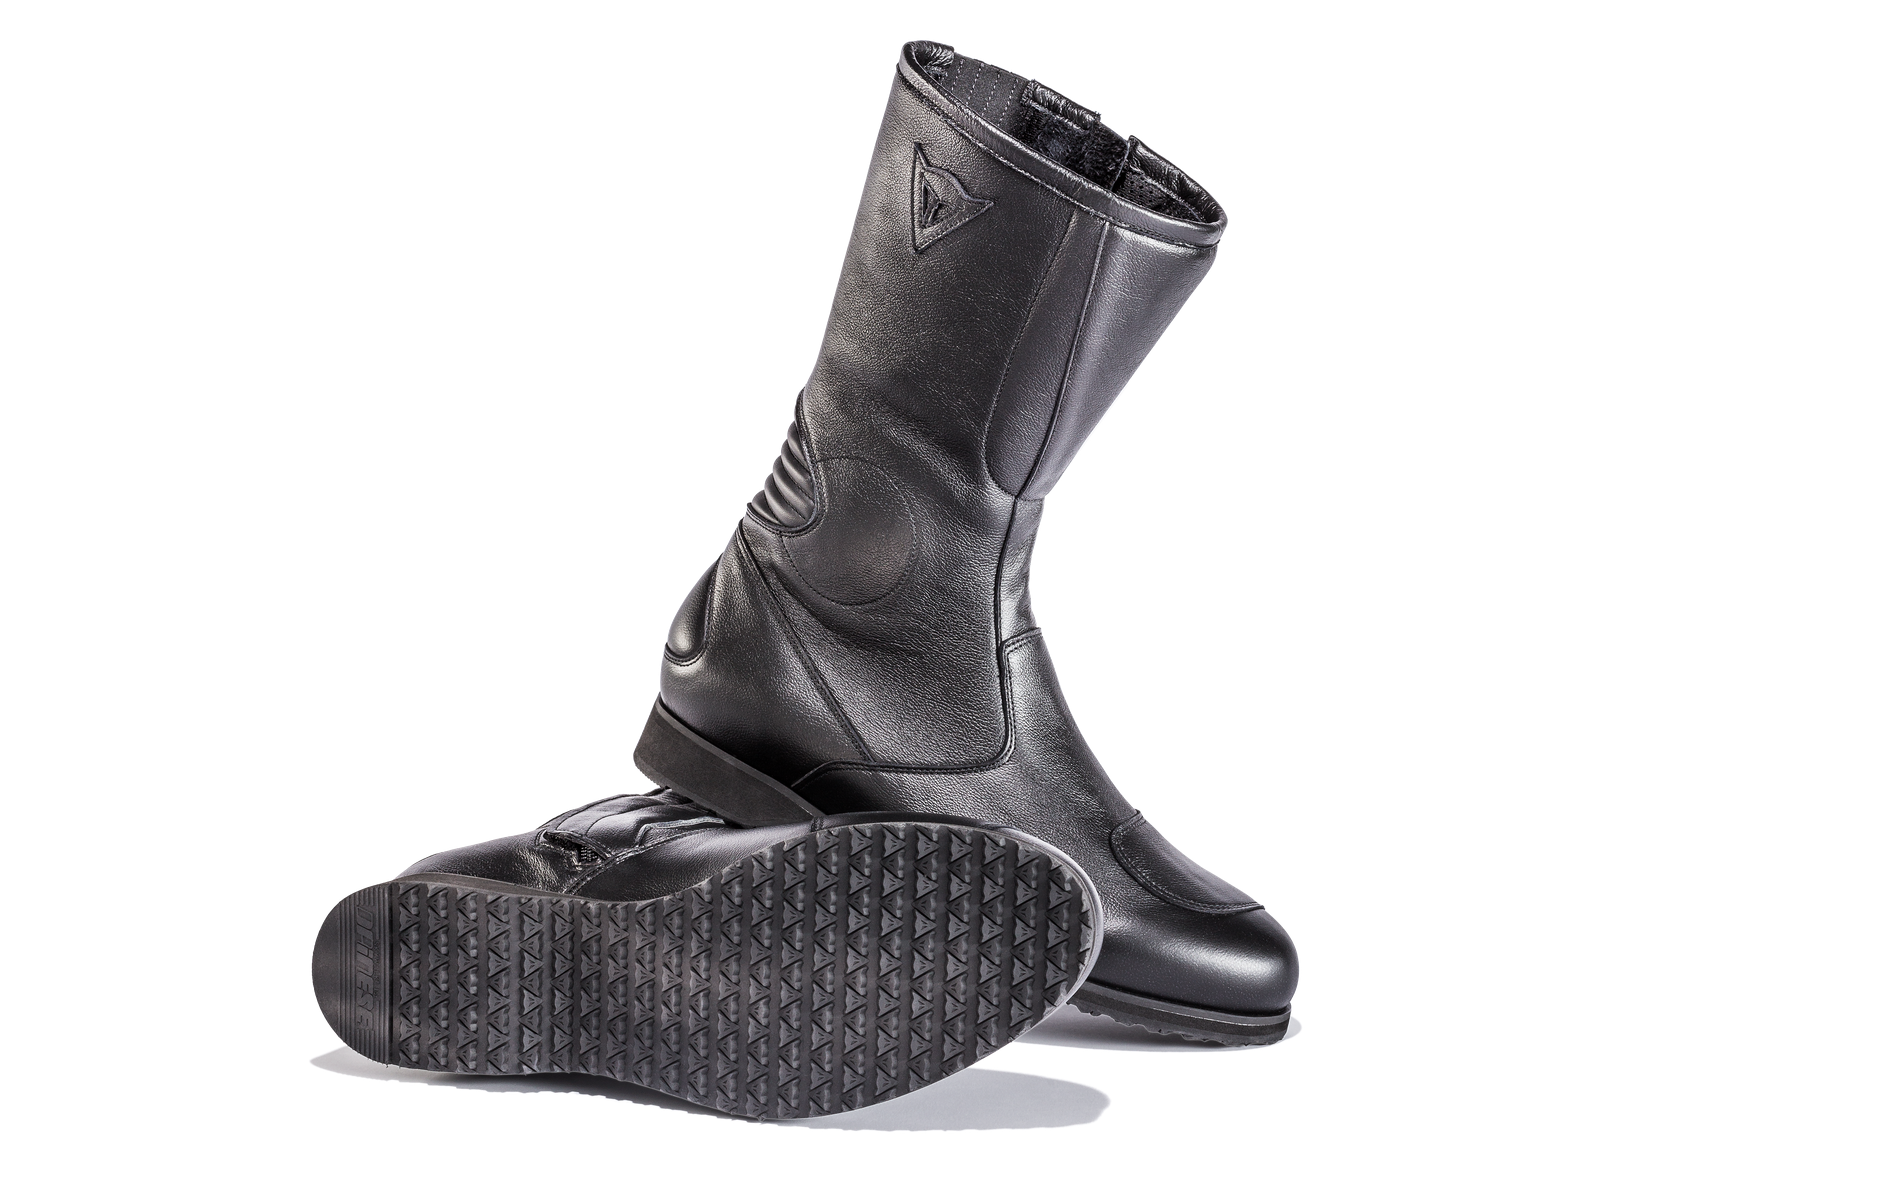 Imola72 boots review | Visordown